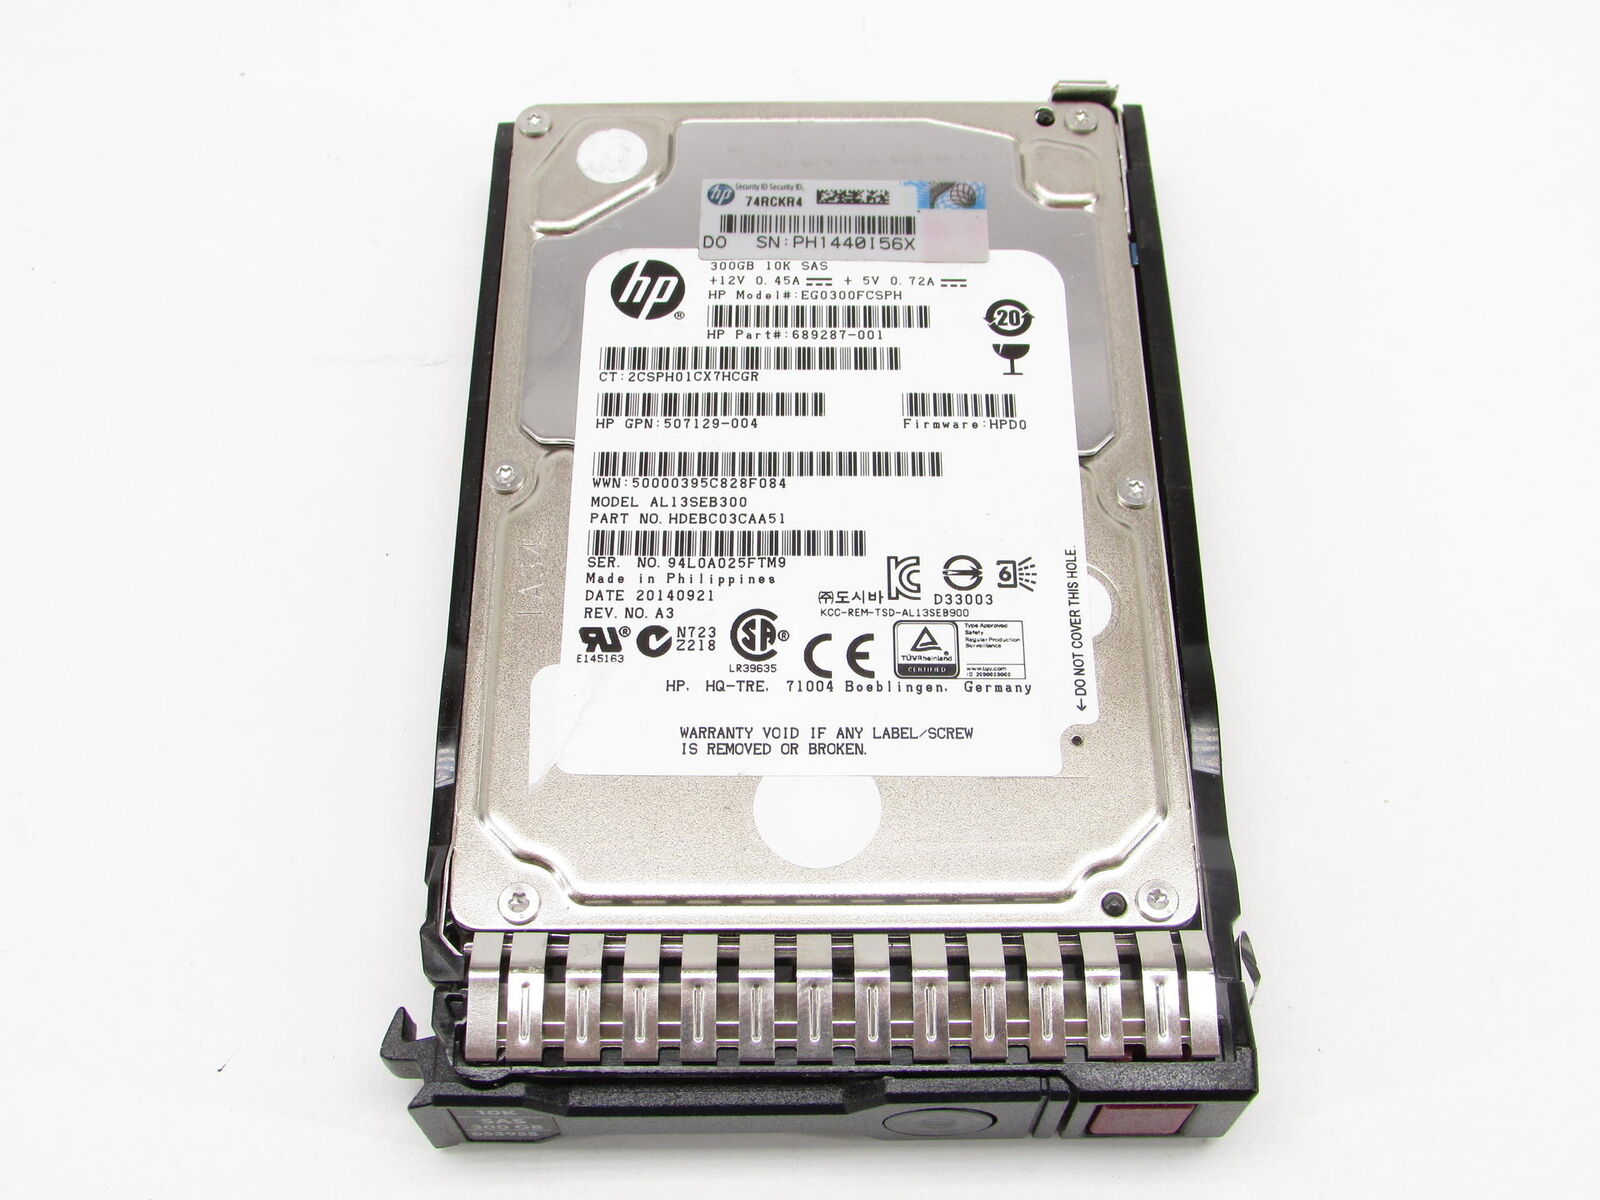 HP 507129-004 653955 300GB 10k SAS 6Gb/s 2.5 Toshiba 64mb HDD Hard Drive Grade A